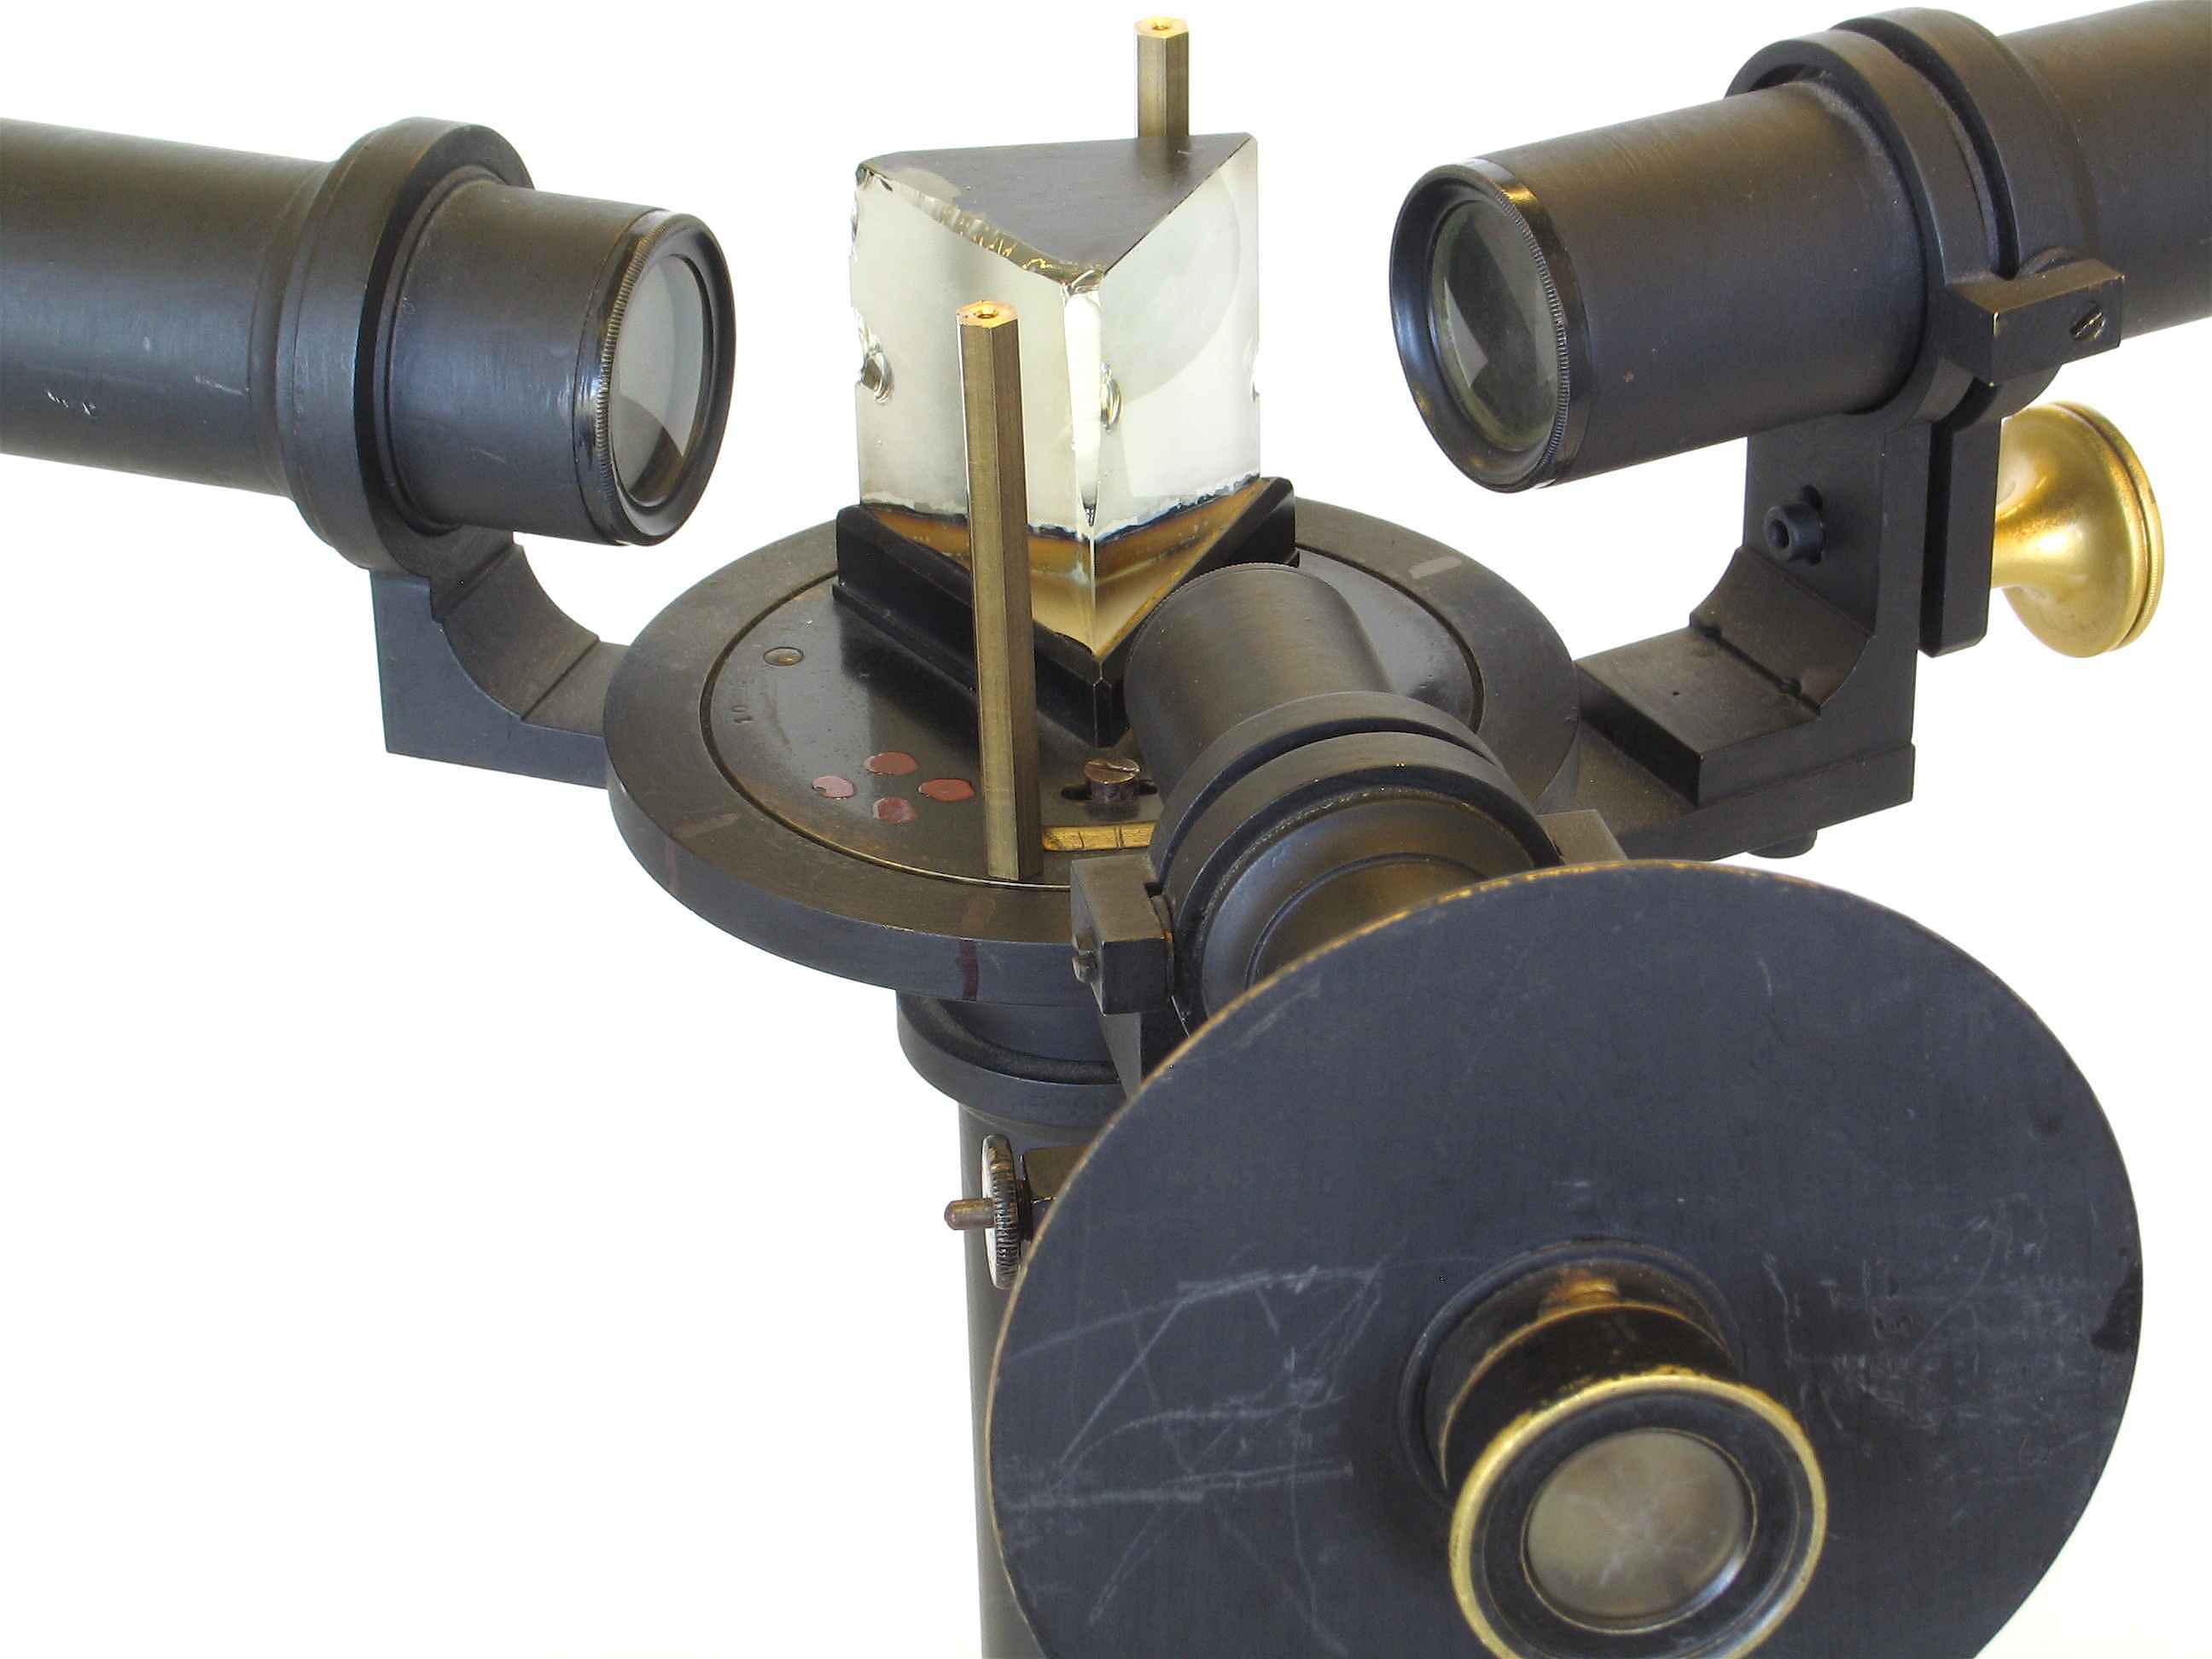 Spectroscope de Bunsen et Kirchhoff
(à trois bras)